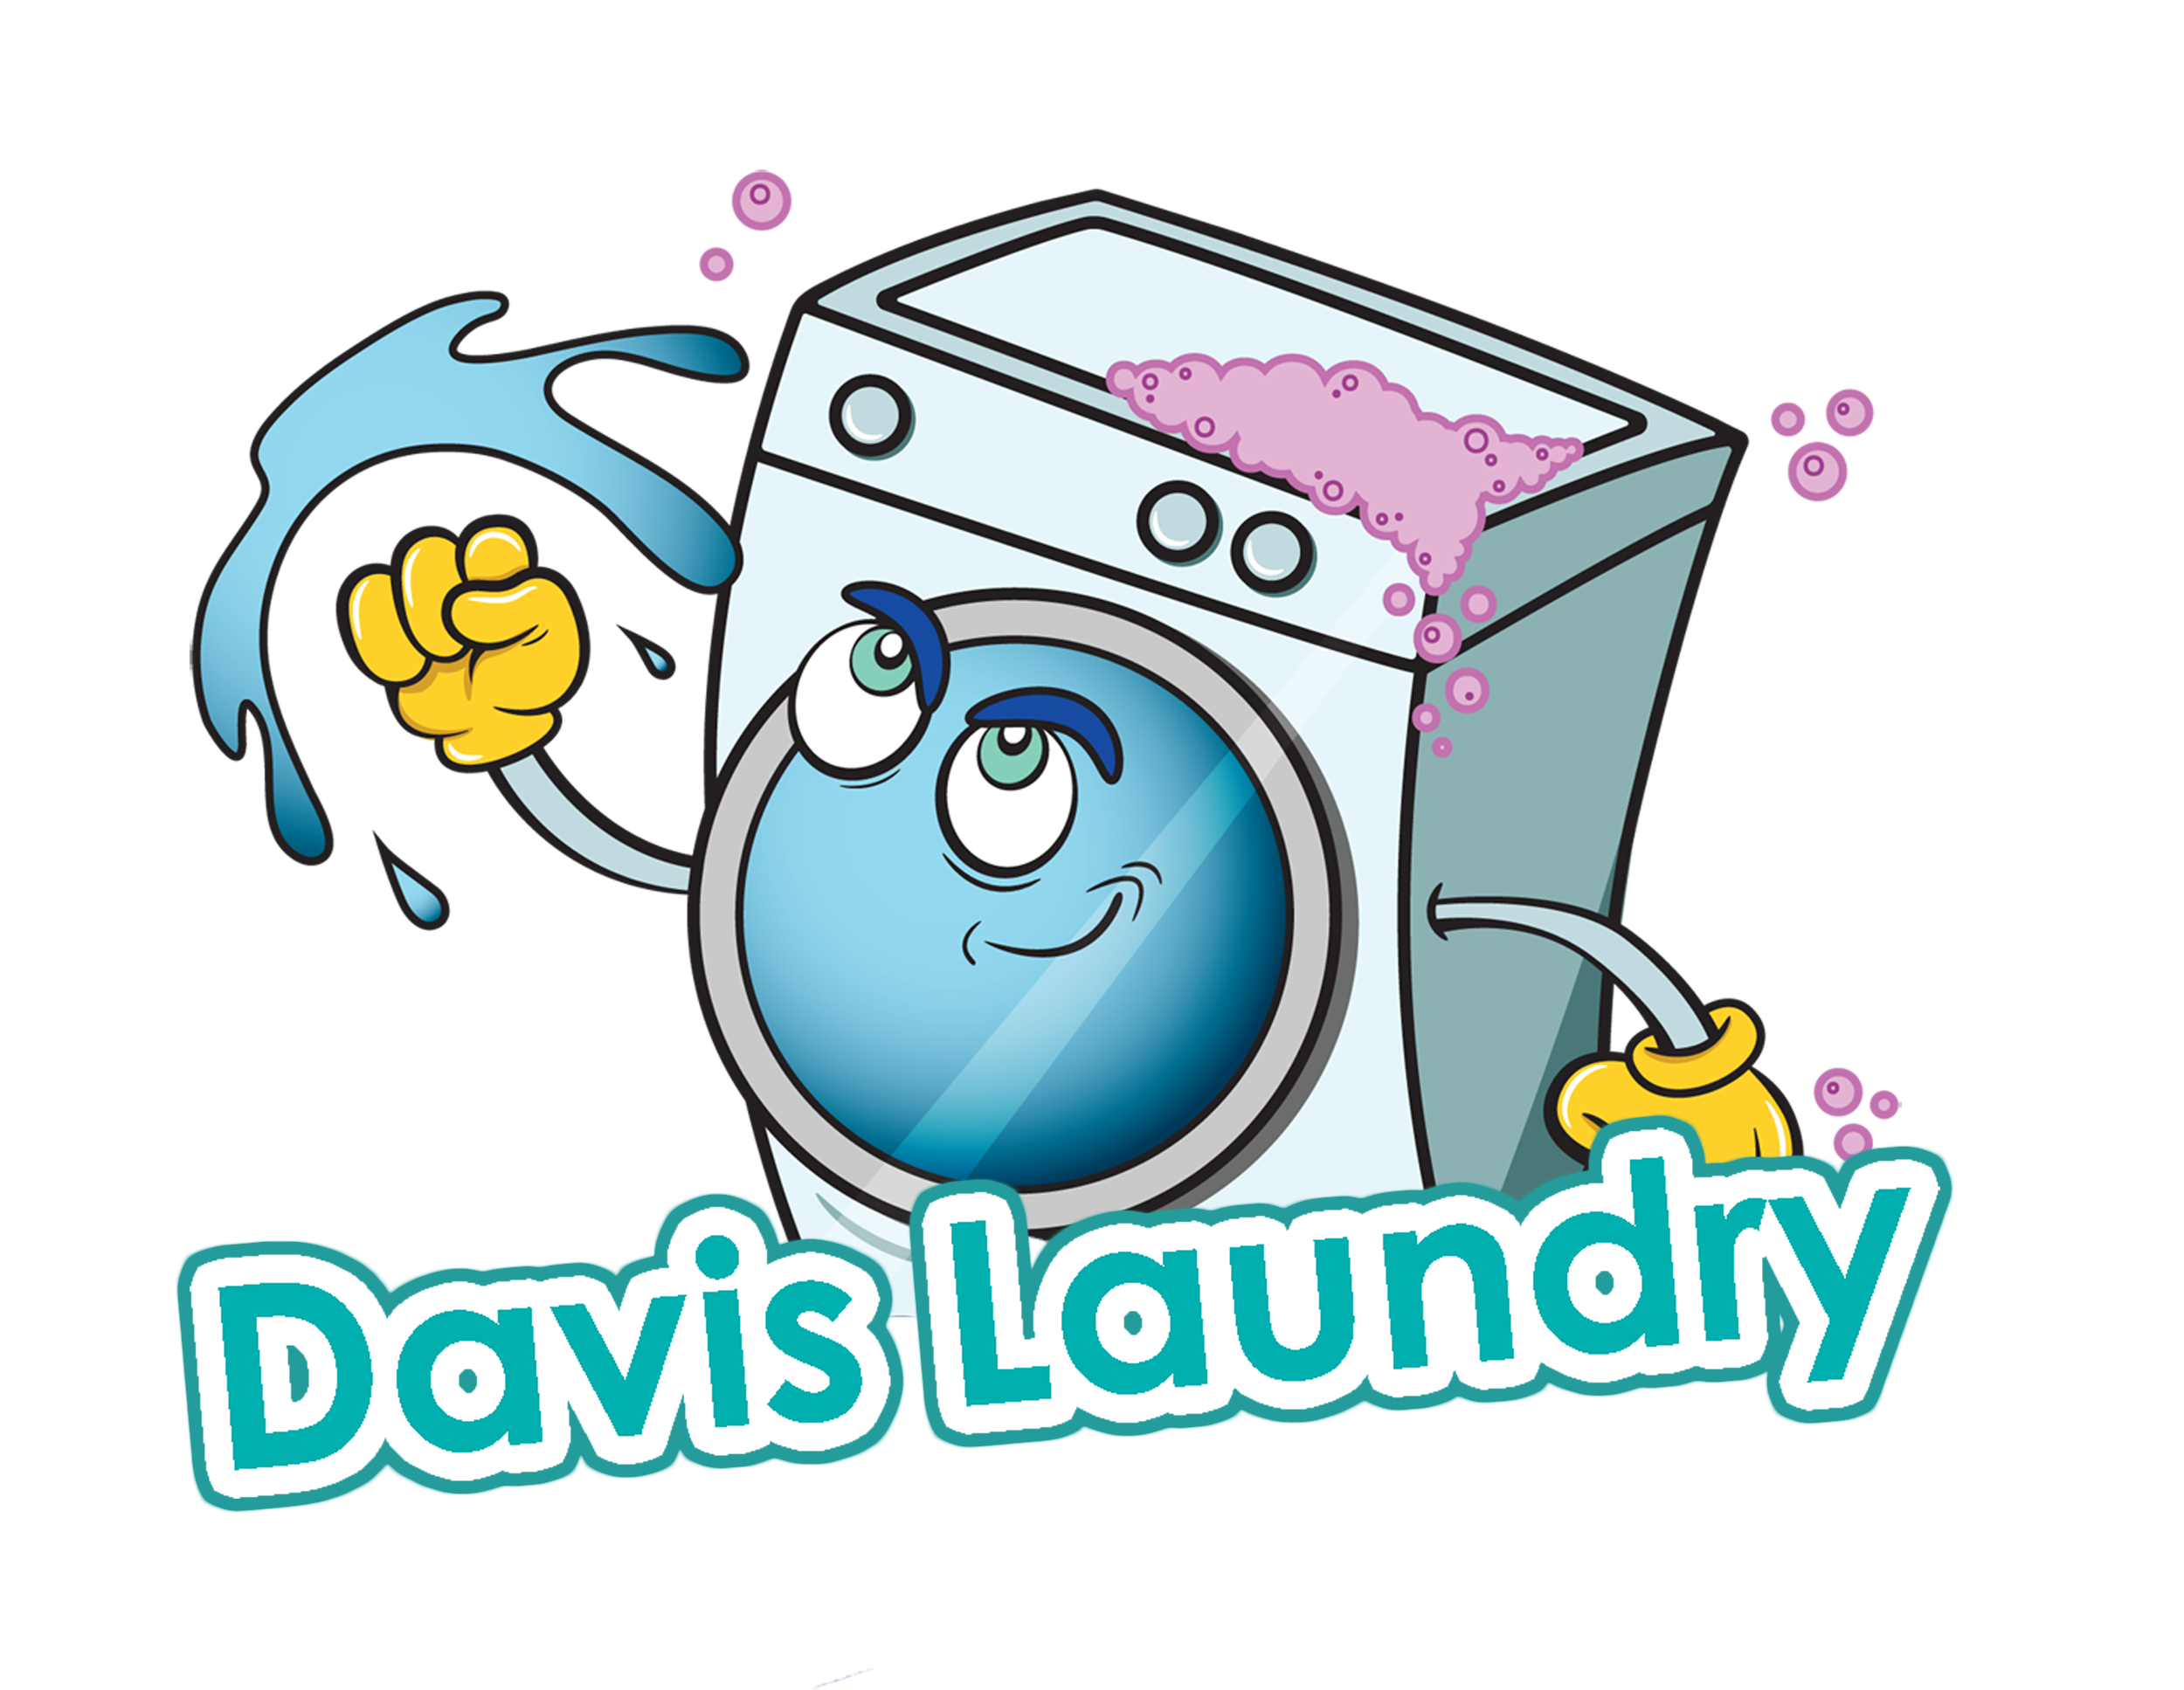 Davis Laundry